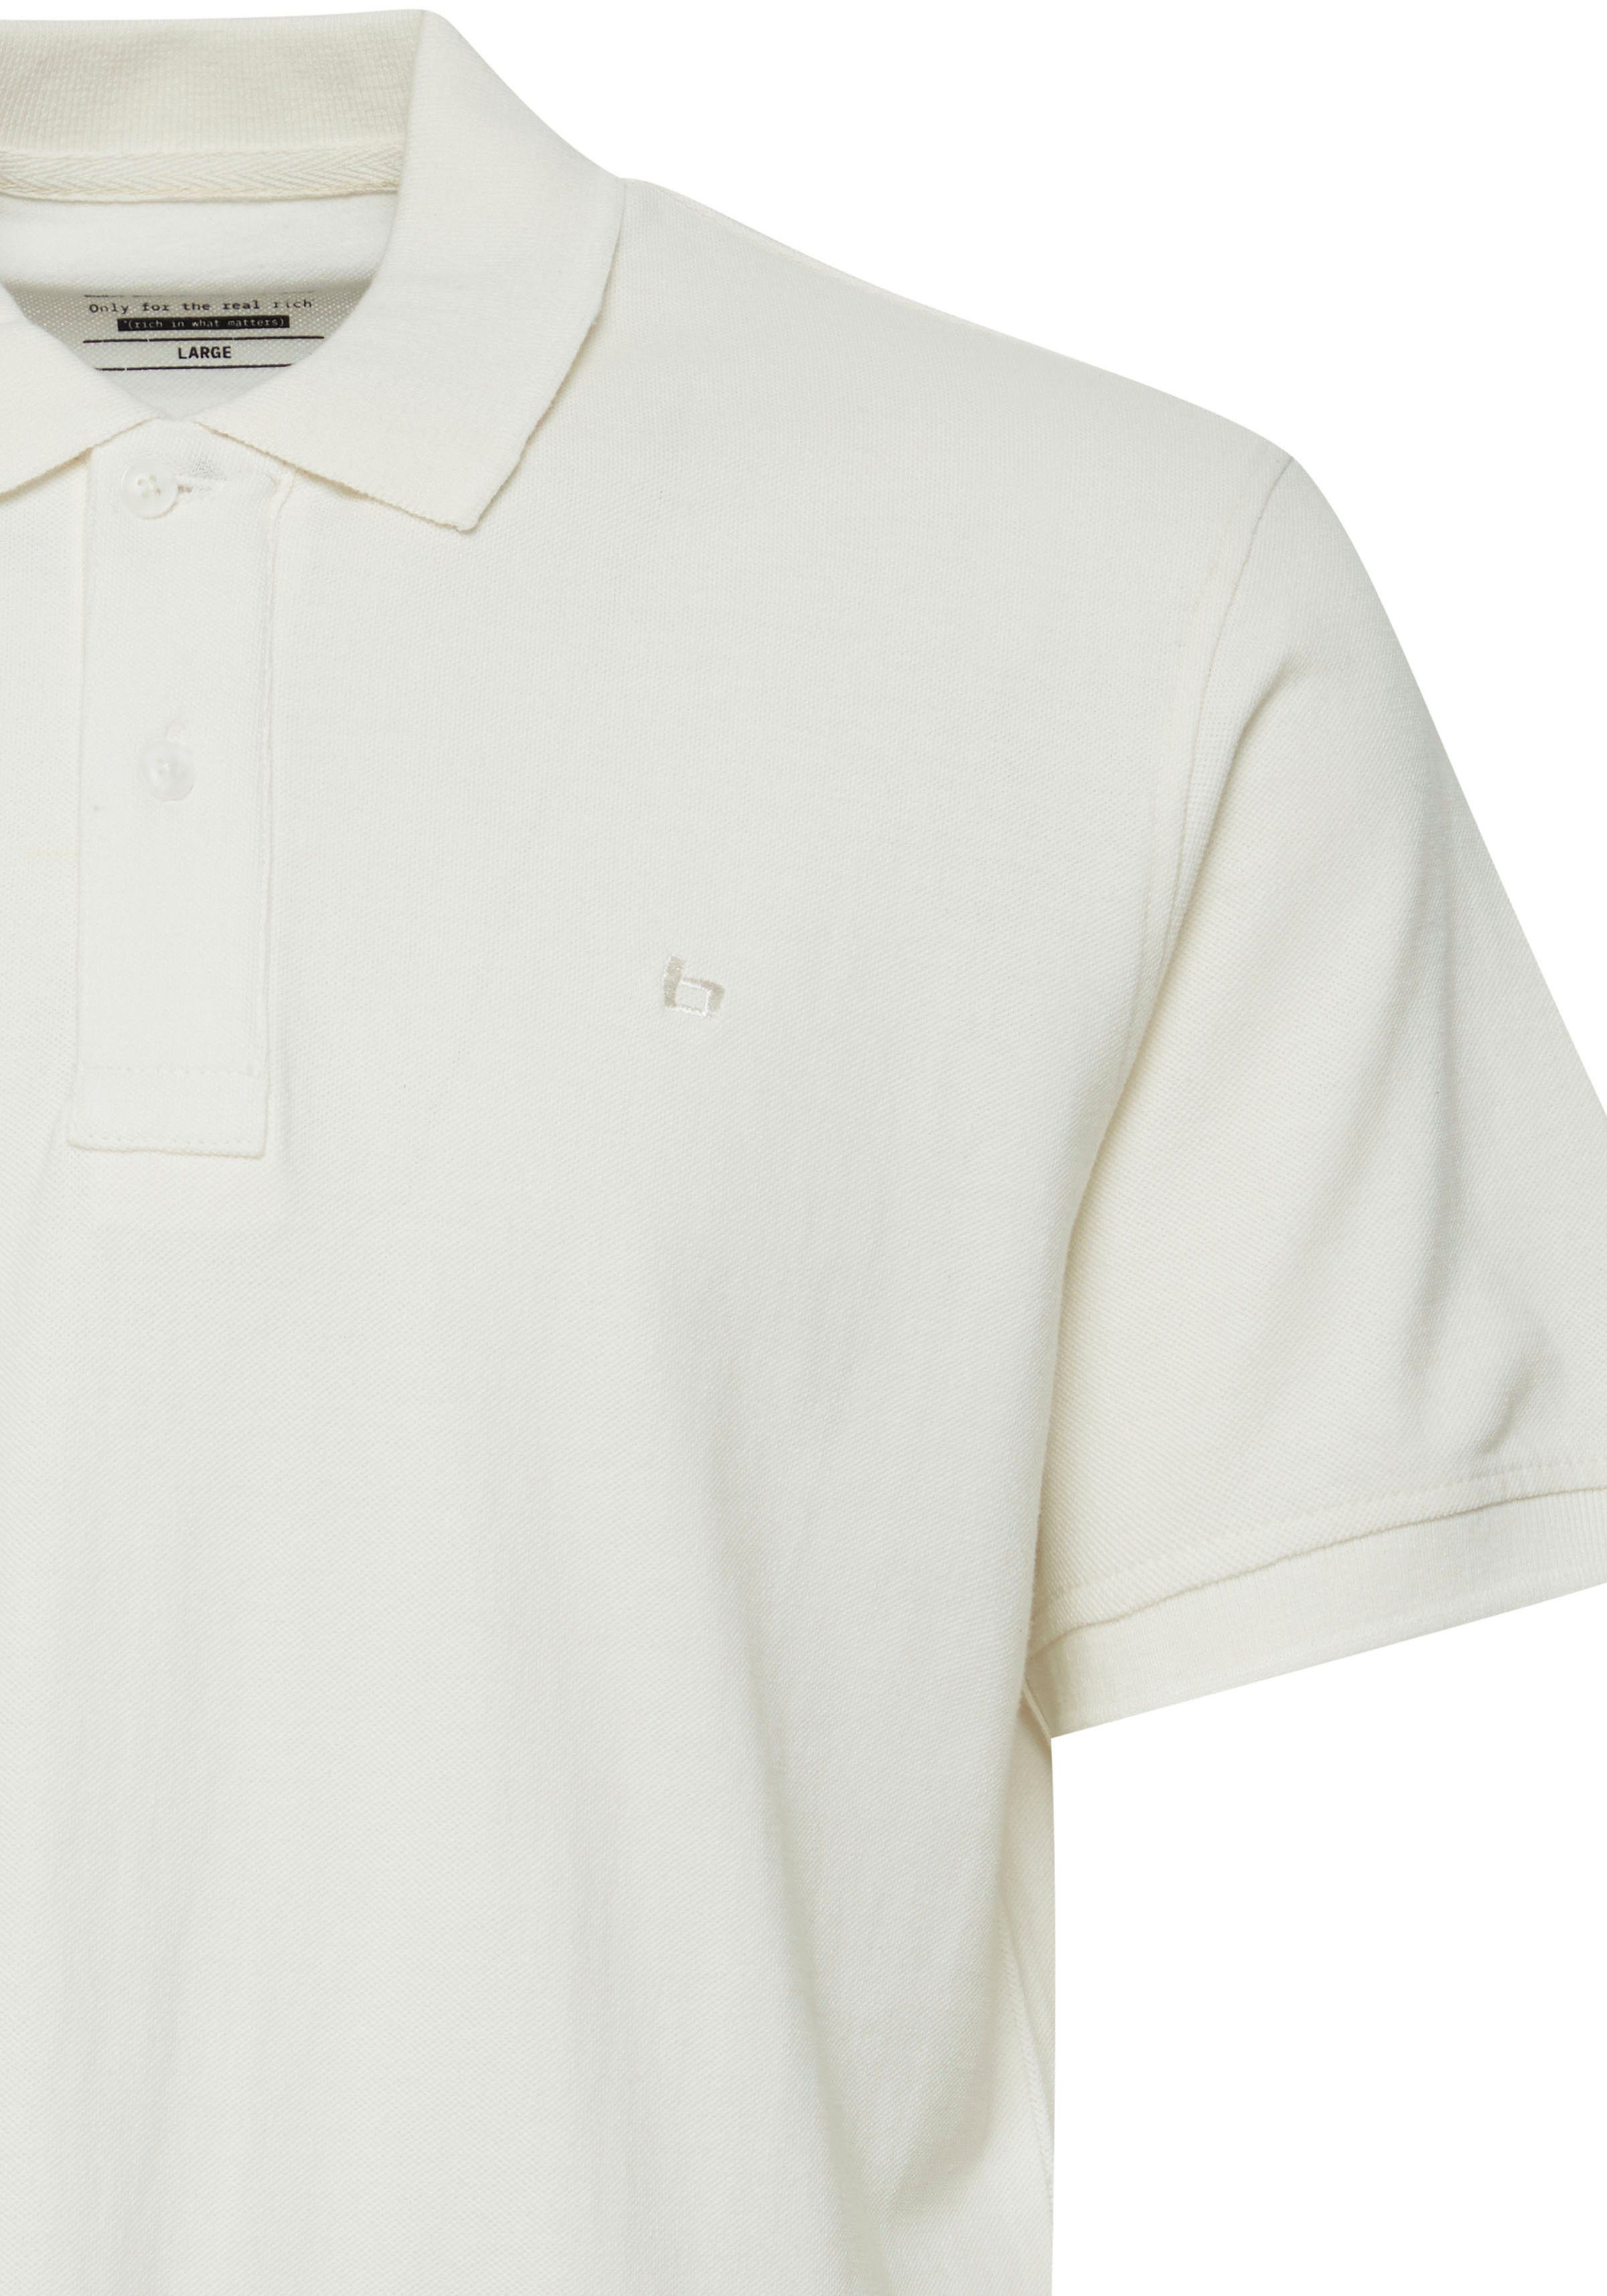 BL-Poloshirt Poloshirt white Blend